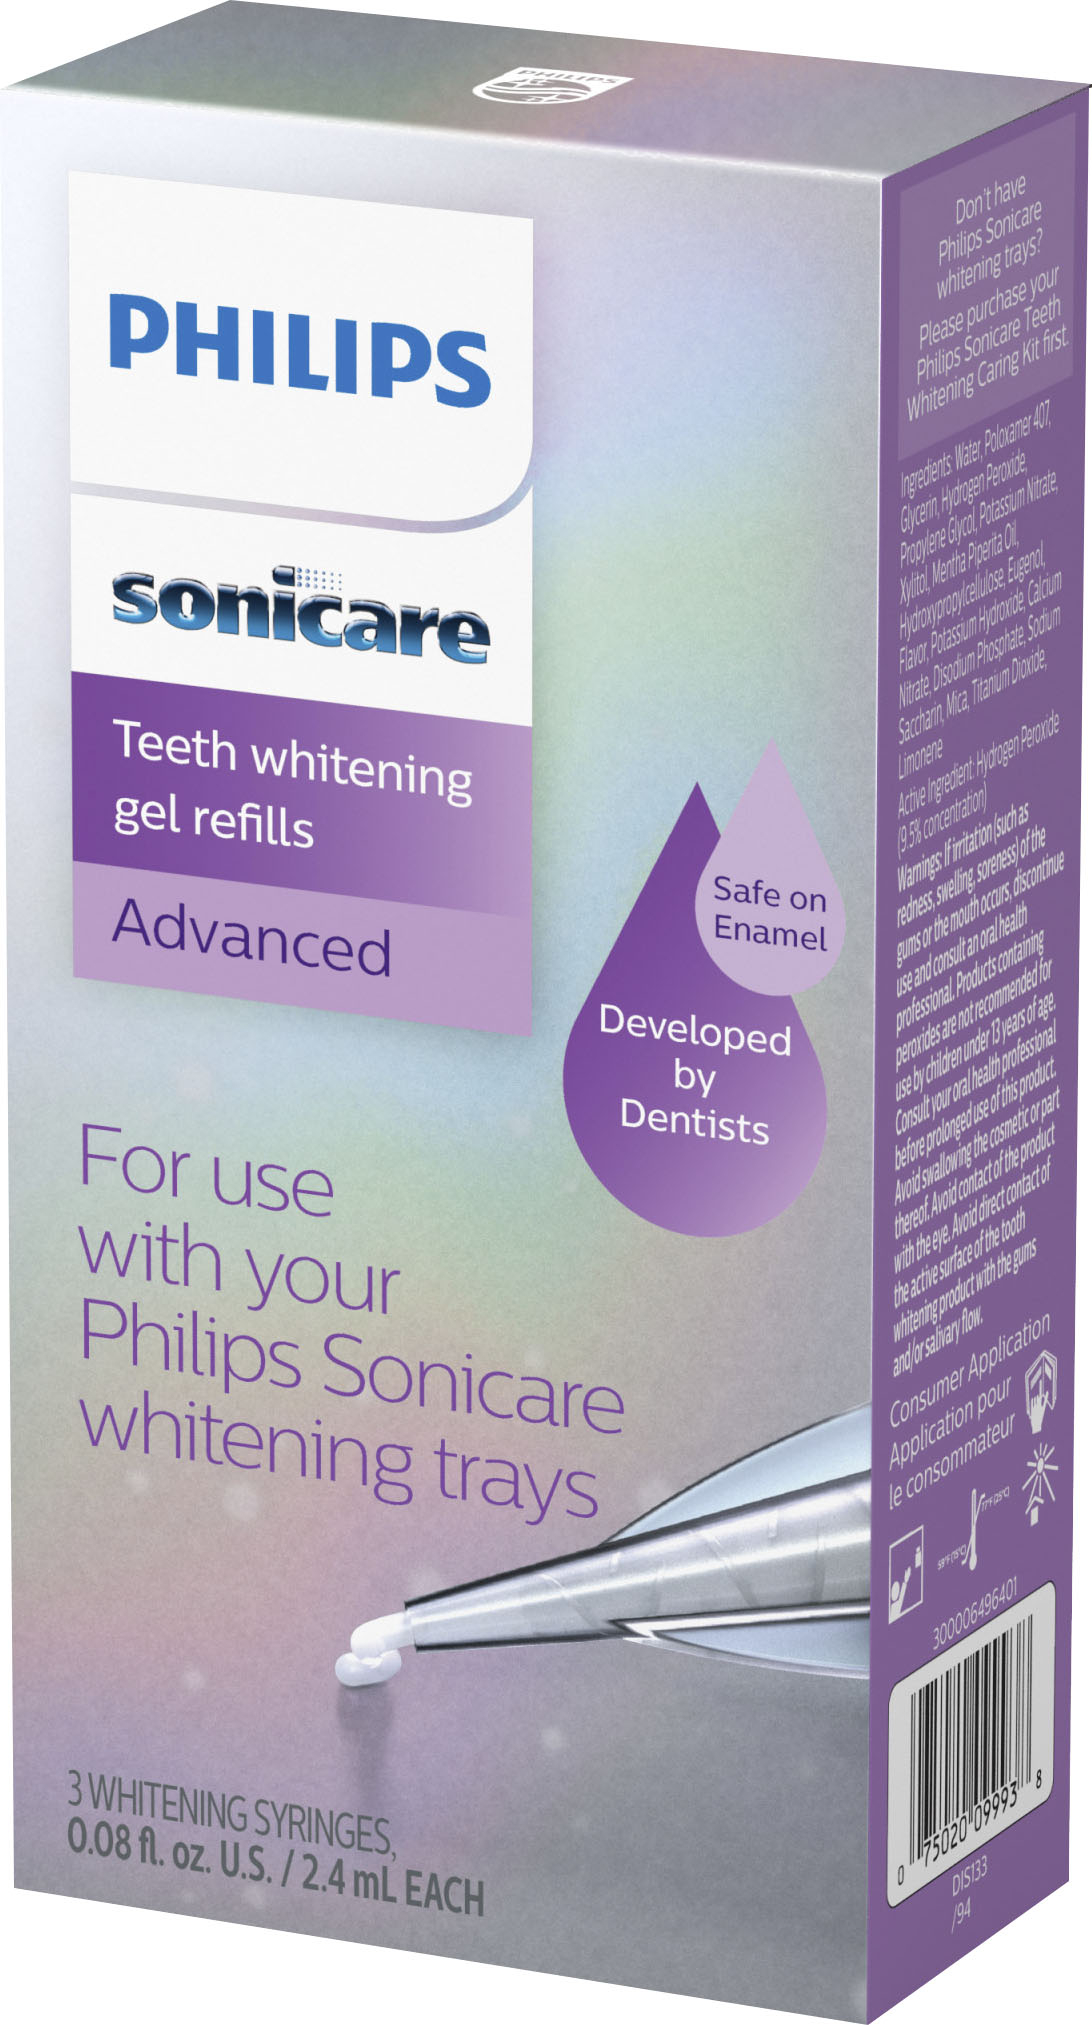 Angle View: Philips Sonicare Advanced Teeth Whitening Gel Replenishment Kit - Black